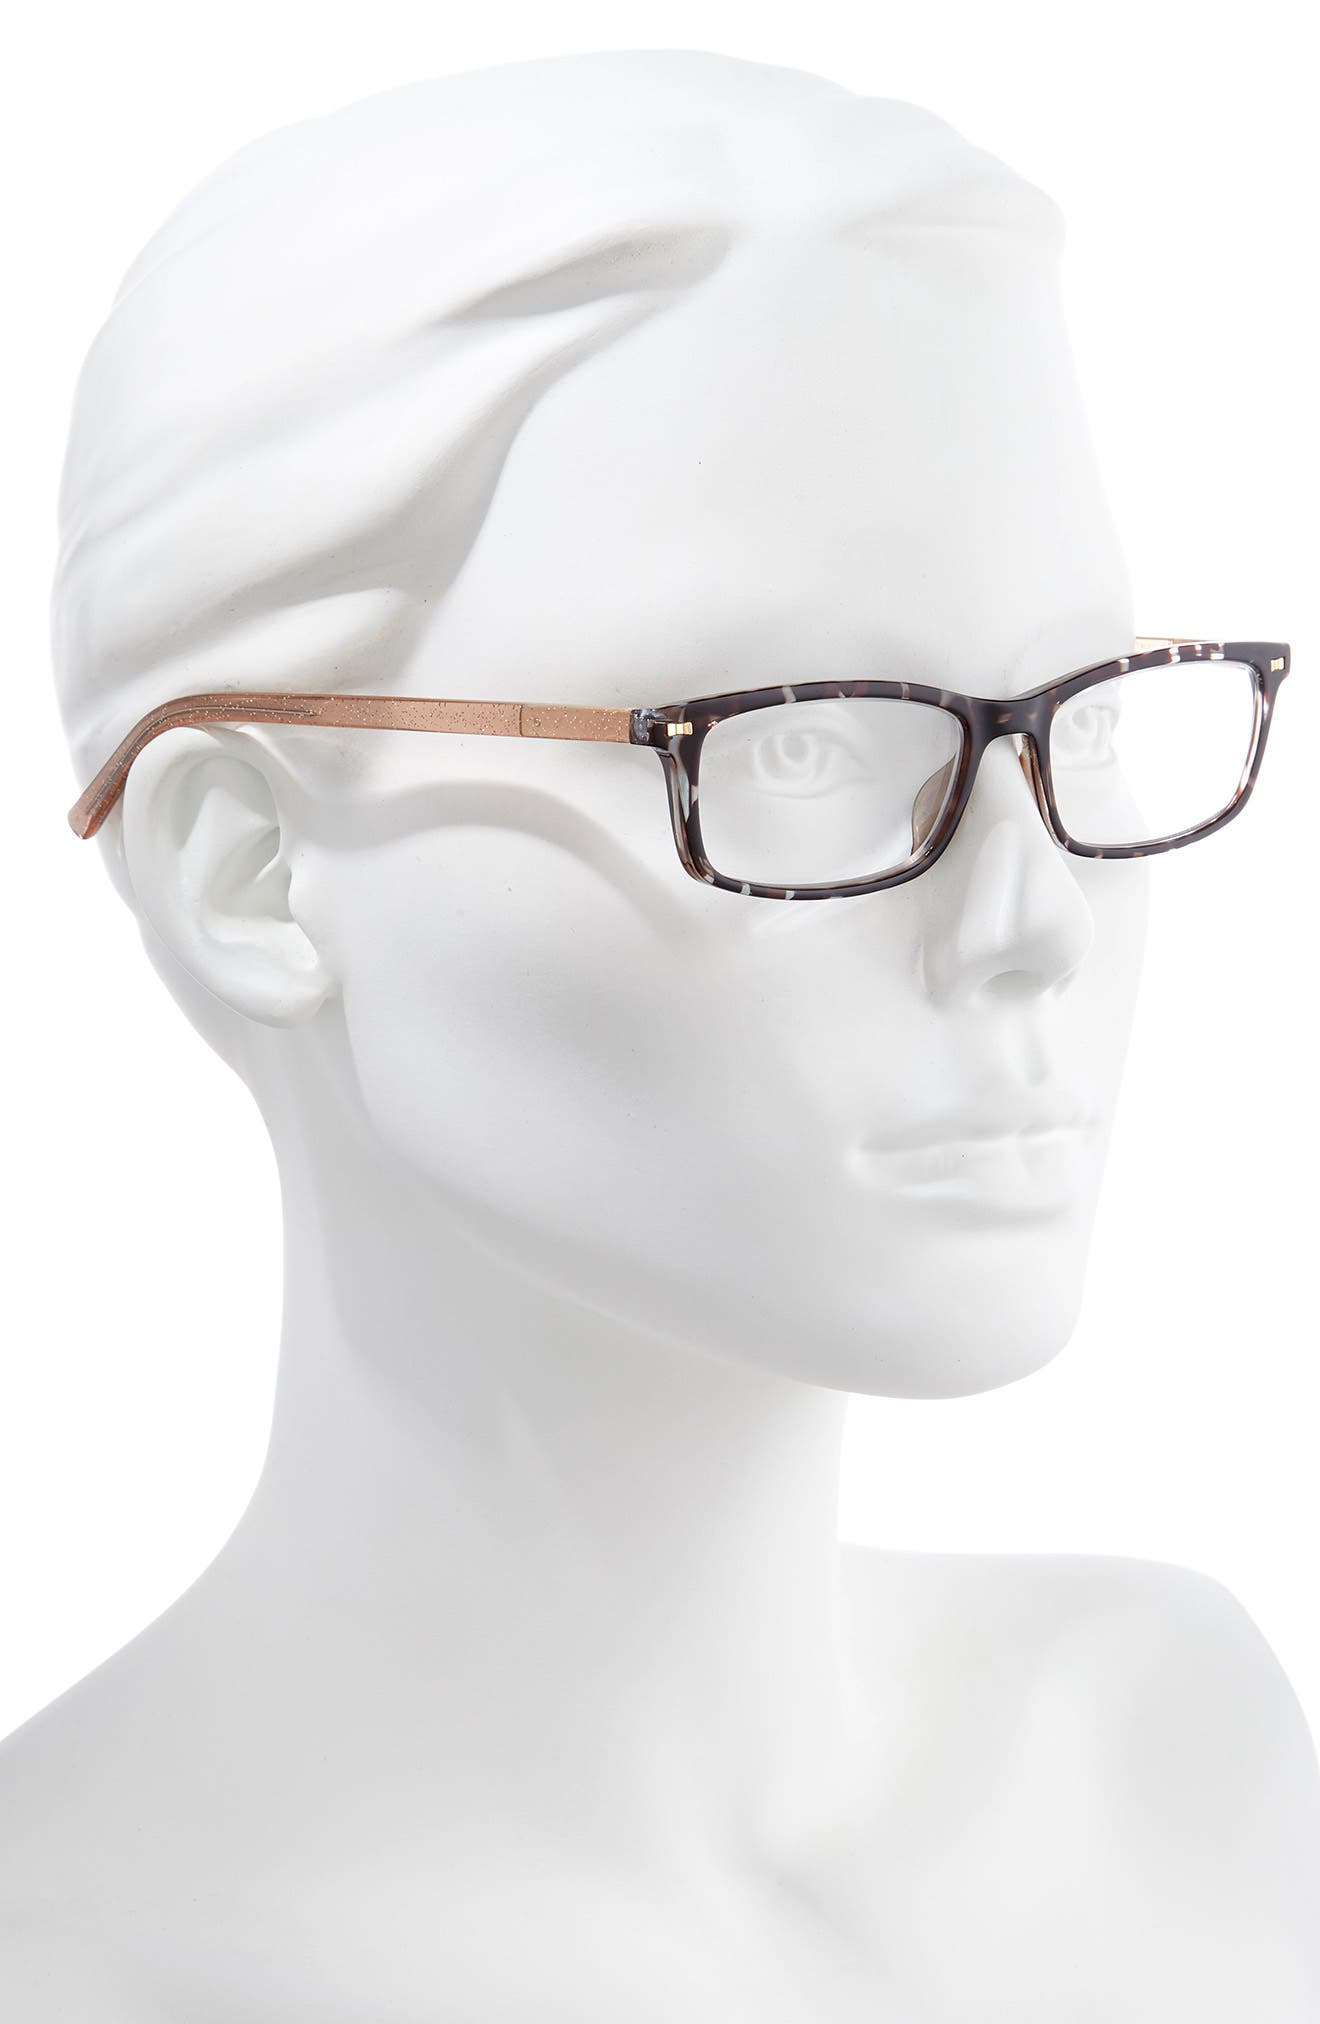 KATE SPADE NEW YORK Tinlee 52MM Reading Glasses HAVANA